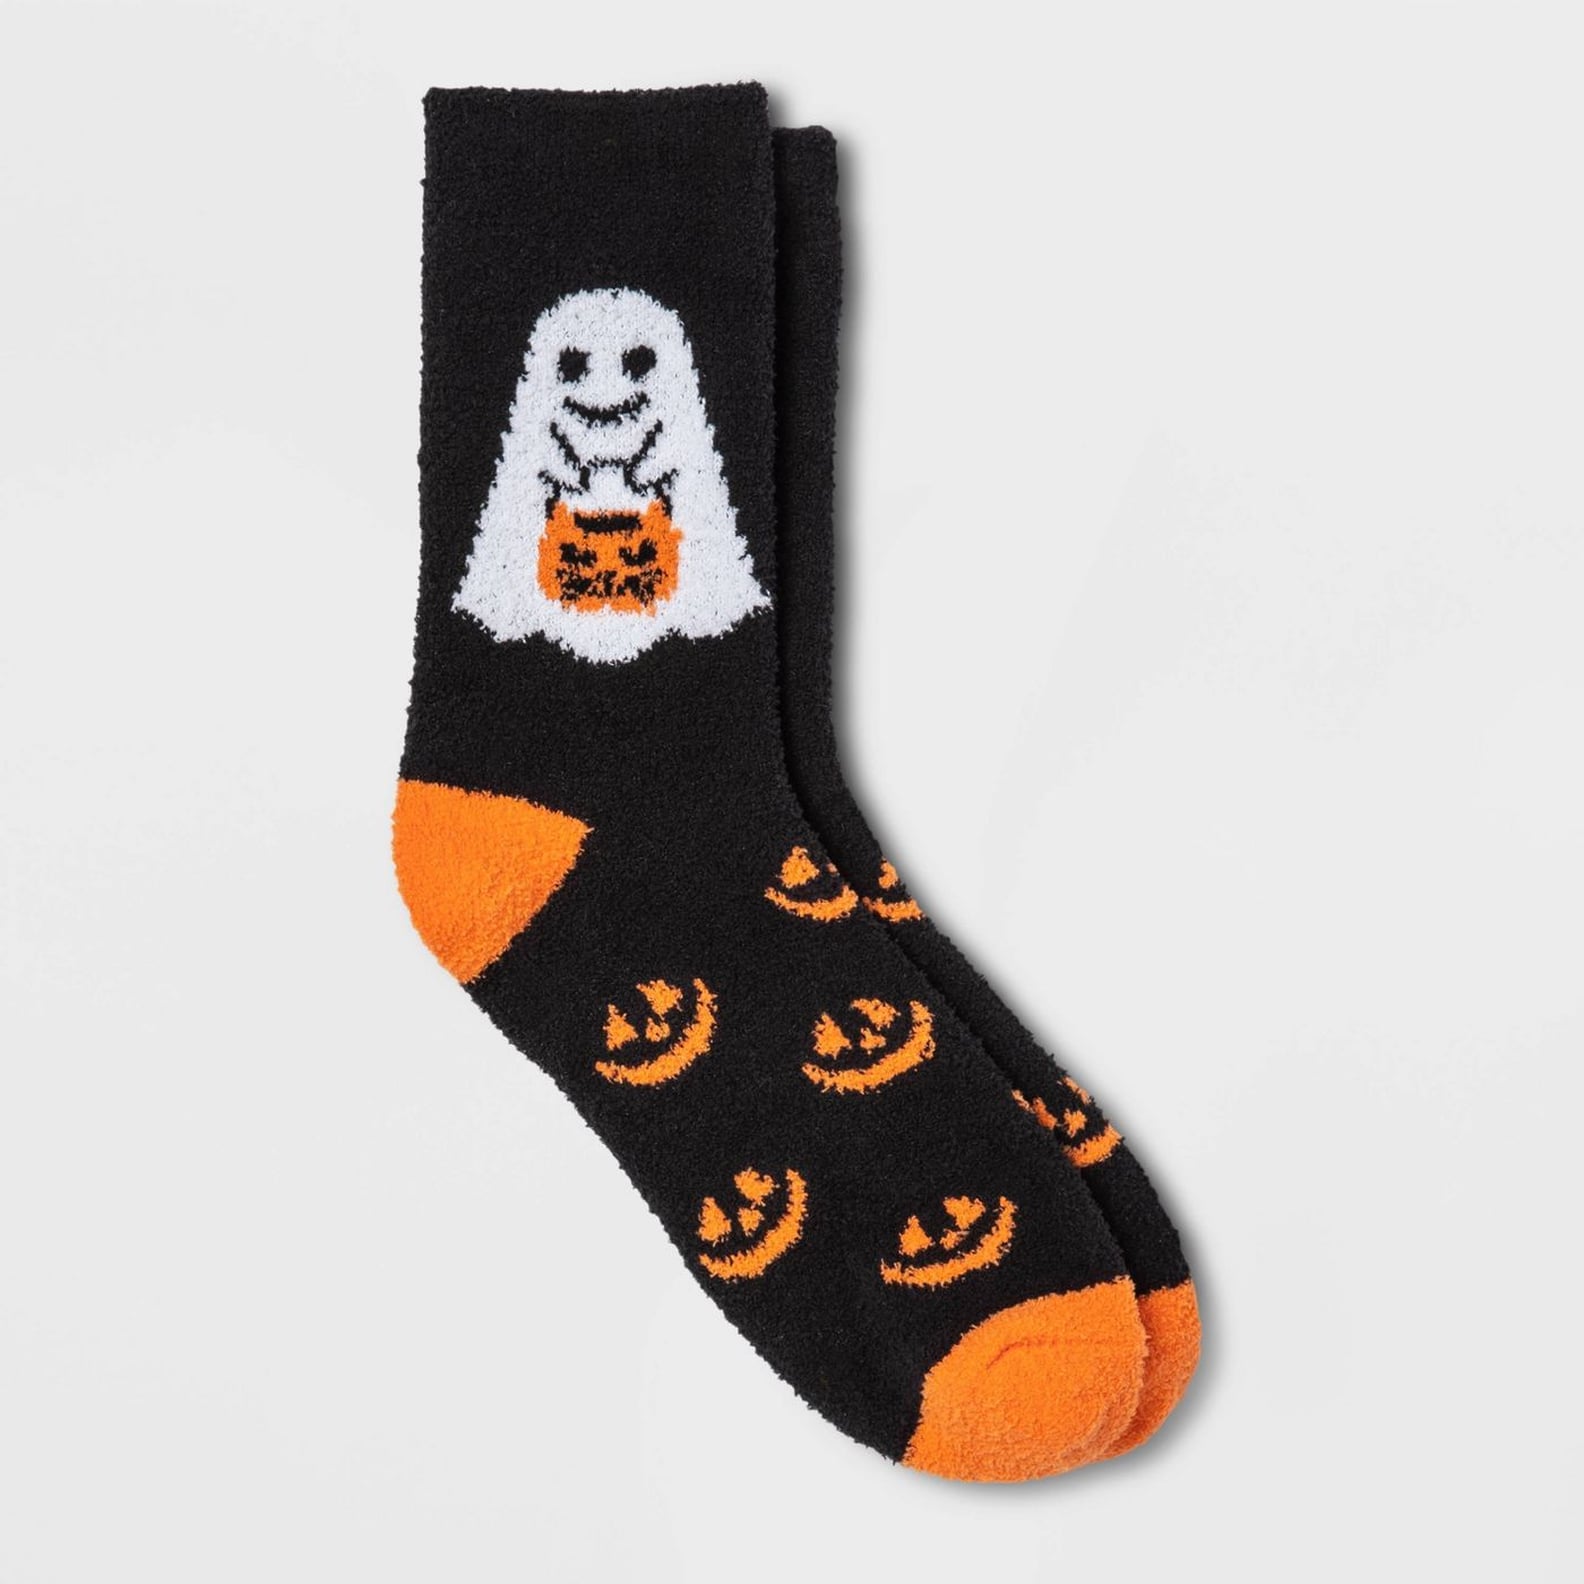 Cute Halloween Socks to Complete Your Haunted Attire | POPSUGAR Smart ...